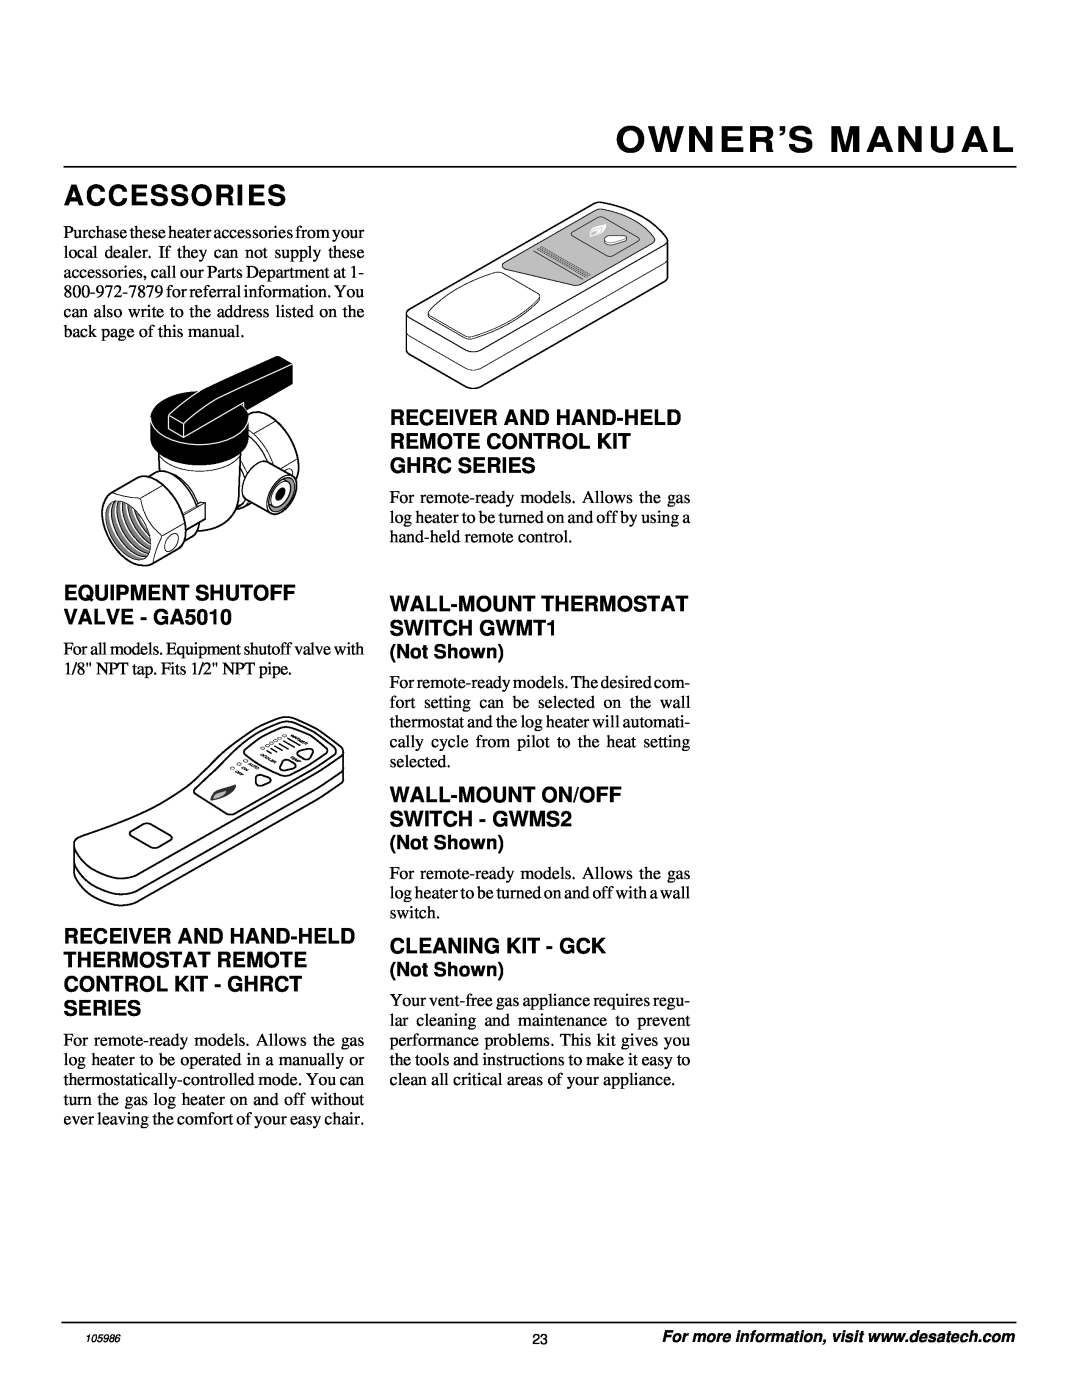 Desa MSVFBP Accessories, Receiver And Hand-Held Remote Control Kit, Ghrc Series, EQUIPMENT SHUTOFF VALVE - GA5010 